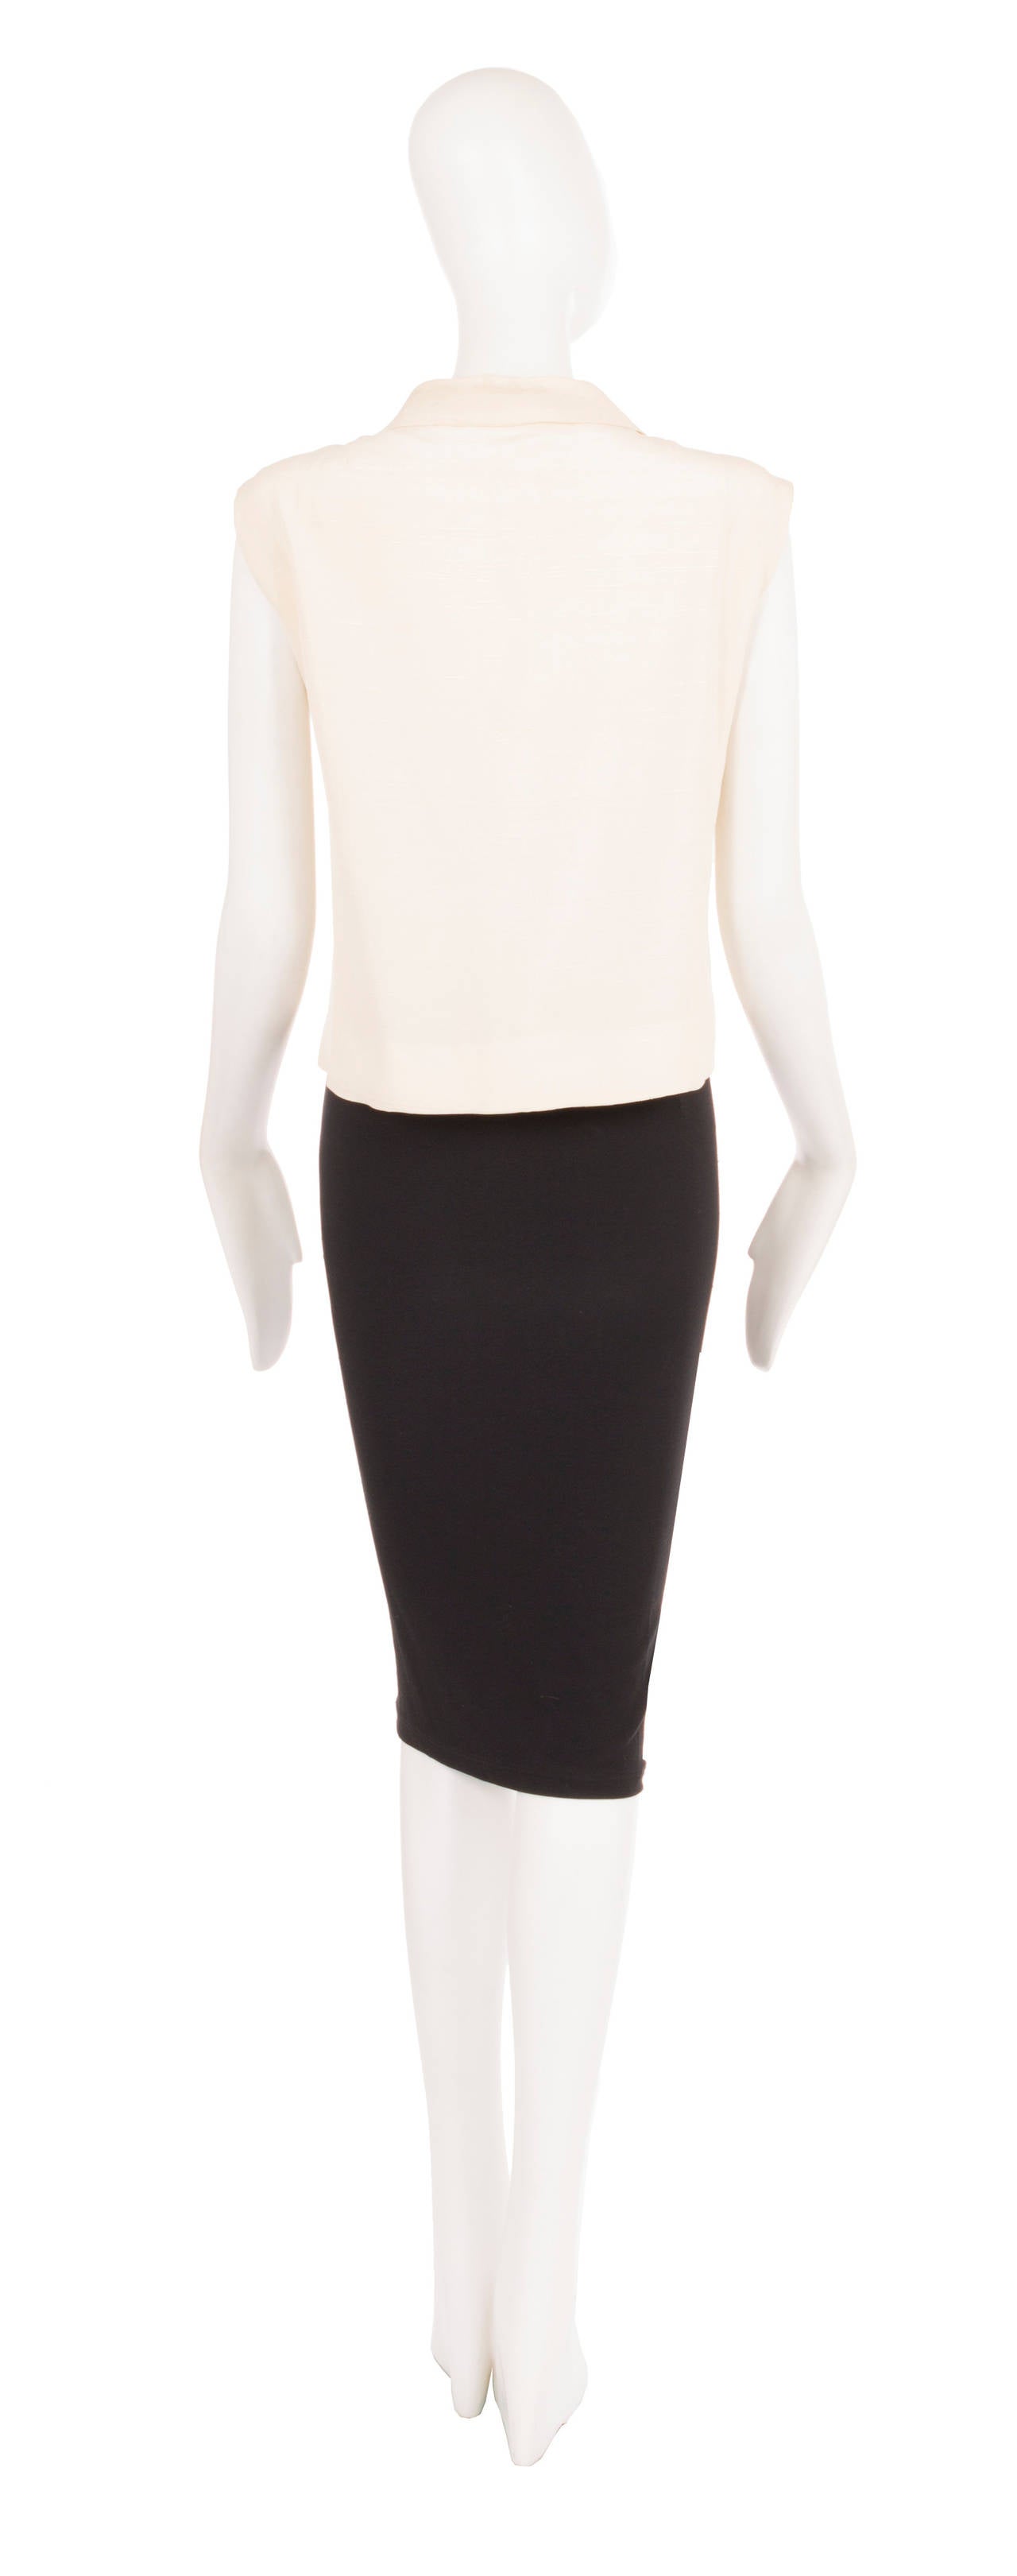 Balenciaga Haute Couture Ivory Silk Shirt, Circa 1968 For Sale at 1stdibs